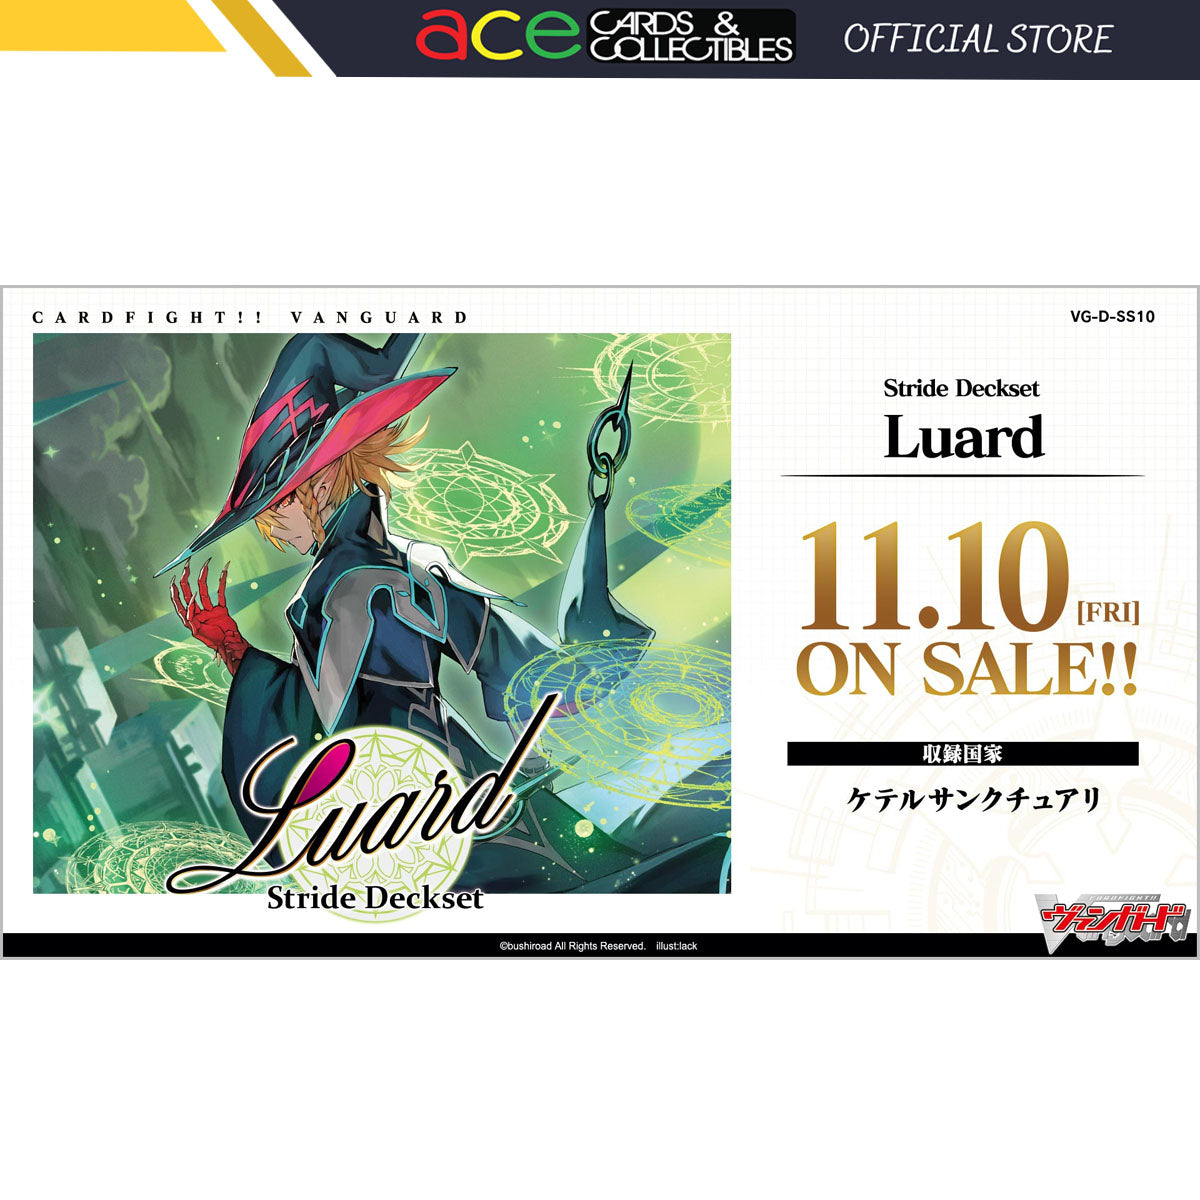 Cardfight!! Vanguard OverDress Special Series Vol. 10 "Stride Deckset Luard" [VG-D-SS10] (Japanese)-Bushiroad-Ace Cards & Collectibles